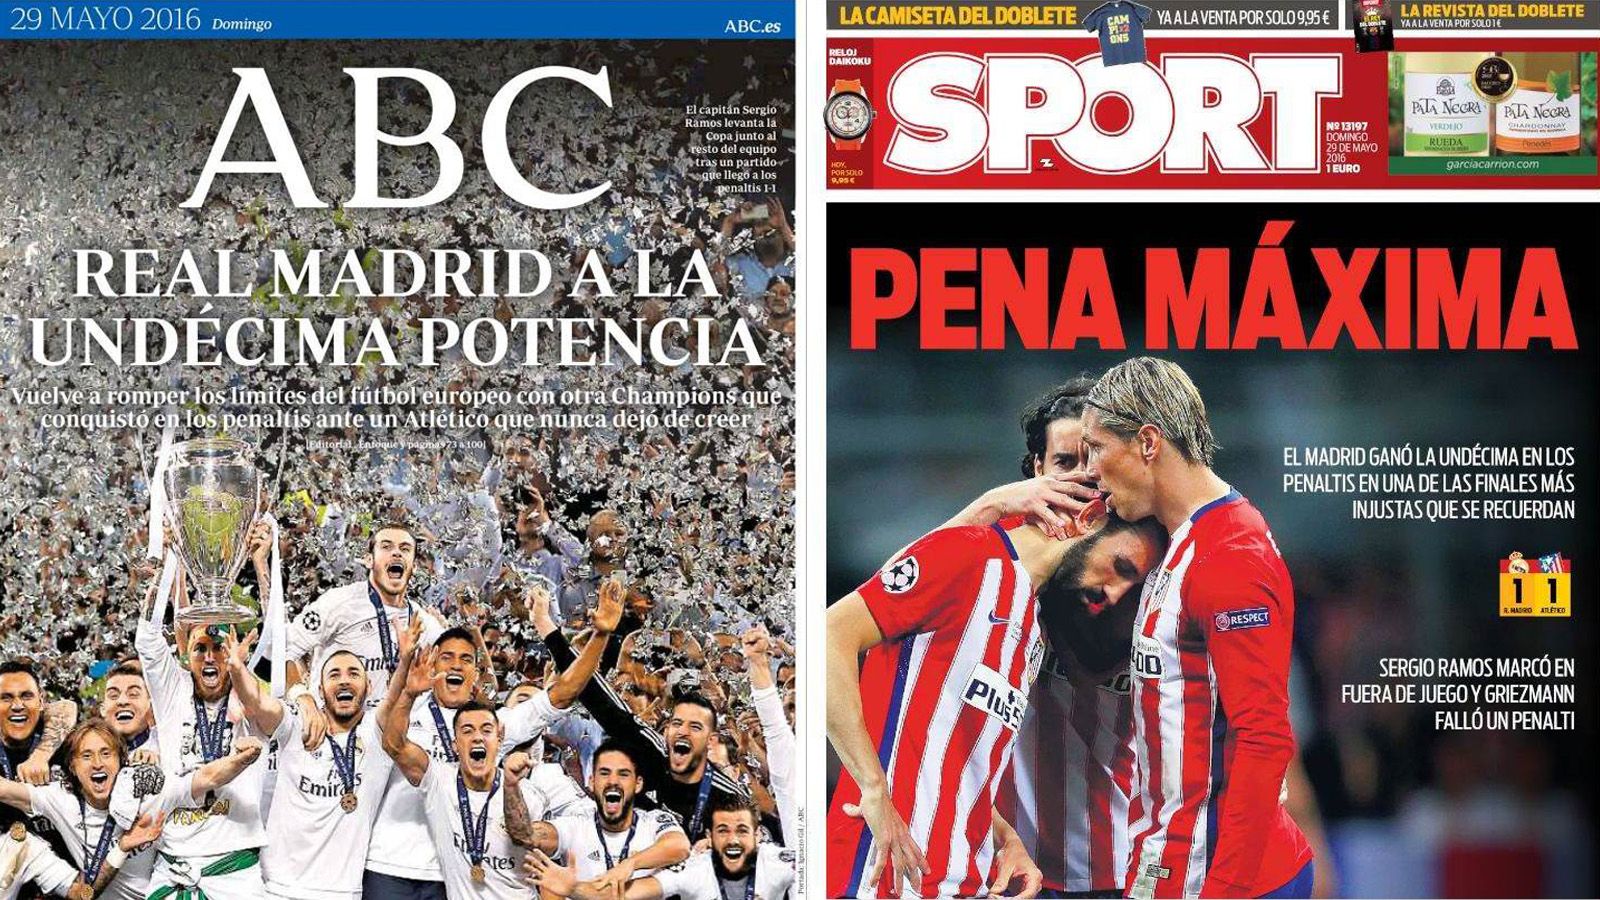 Spanish Sports News